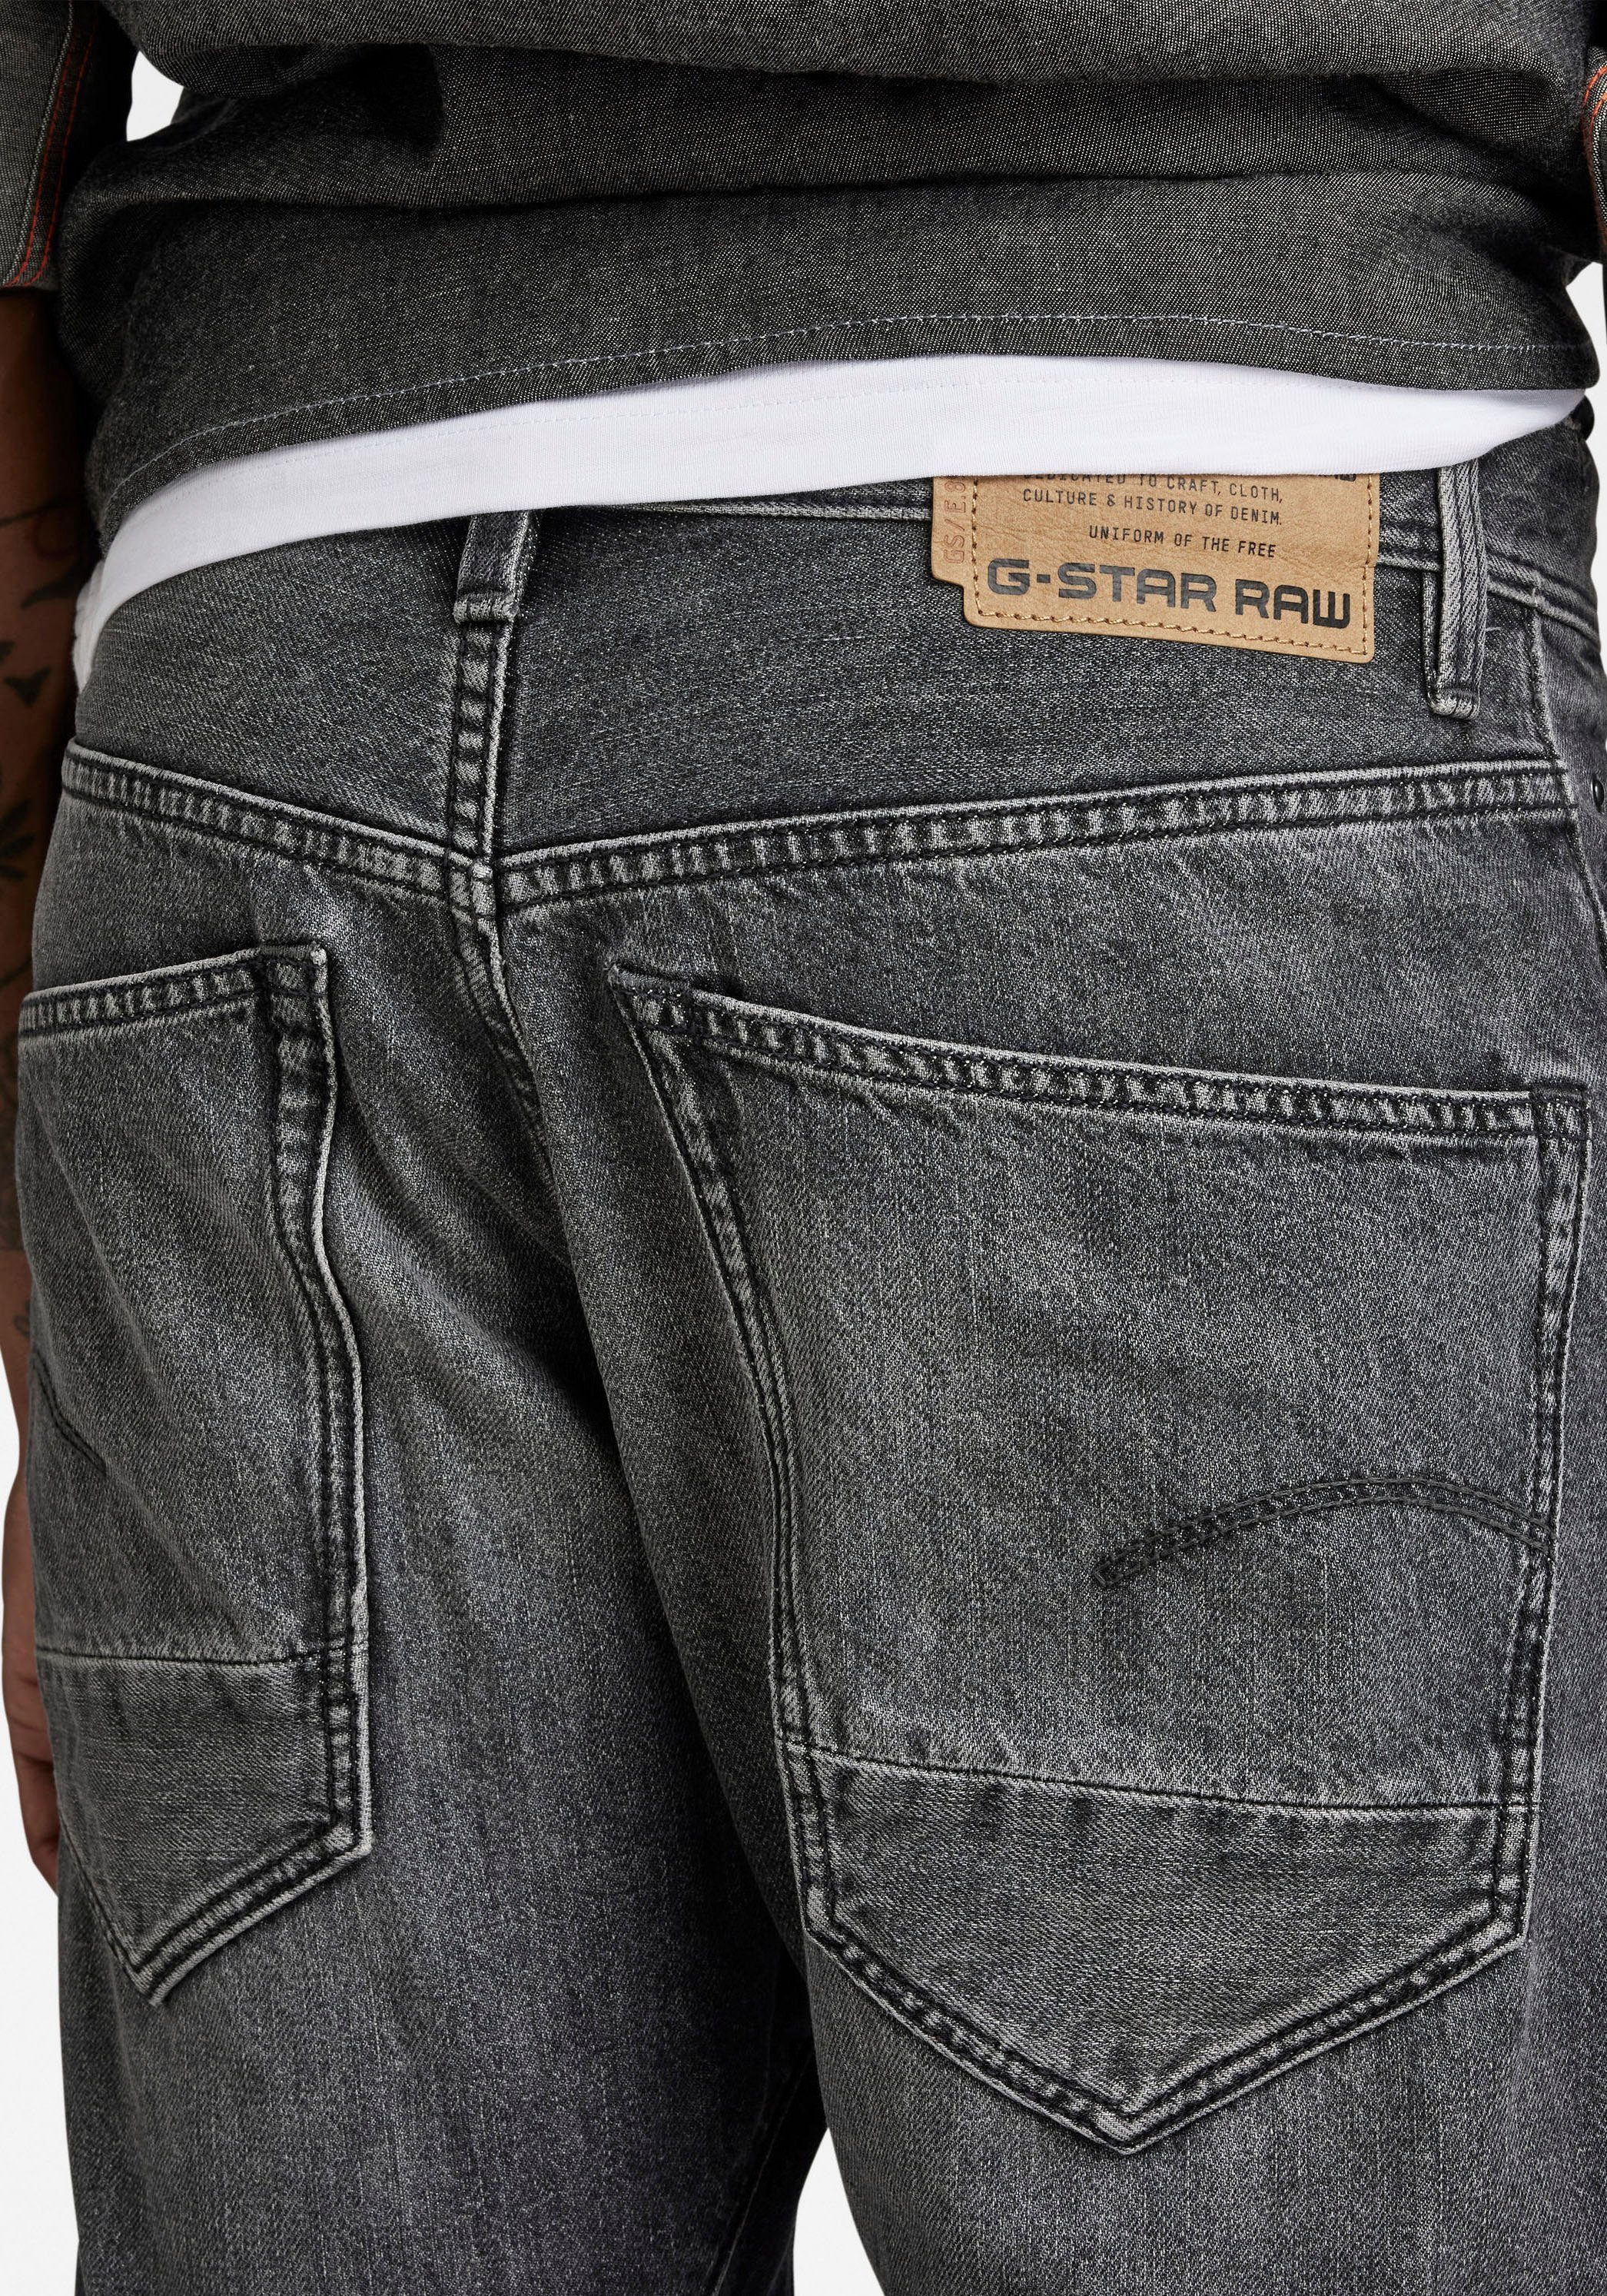 Slim-fit-Jeans moonlit Arc faded Antique 3D RAW G-Star Jeans